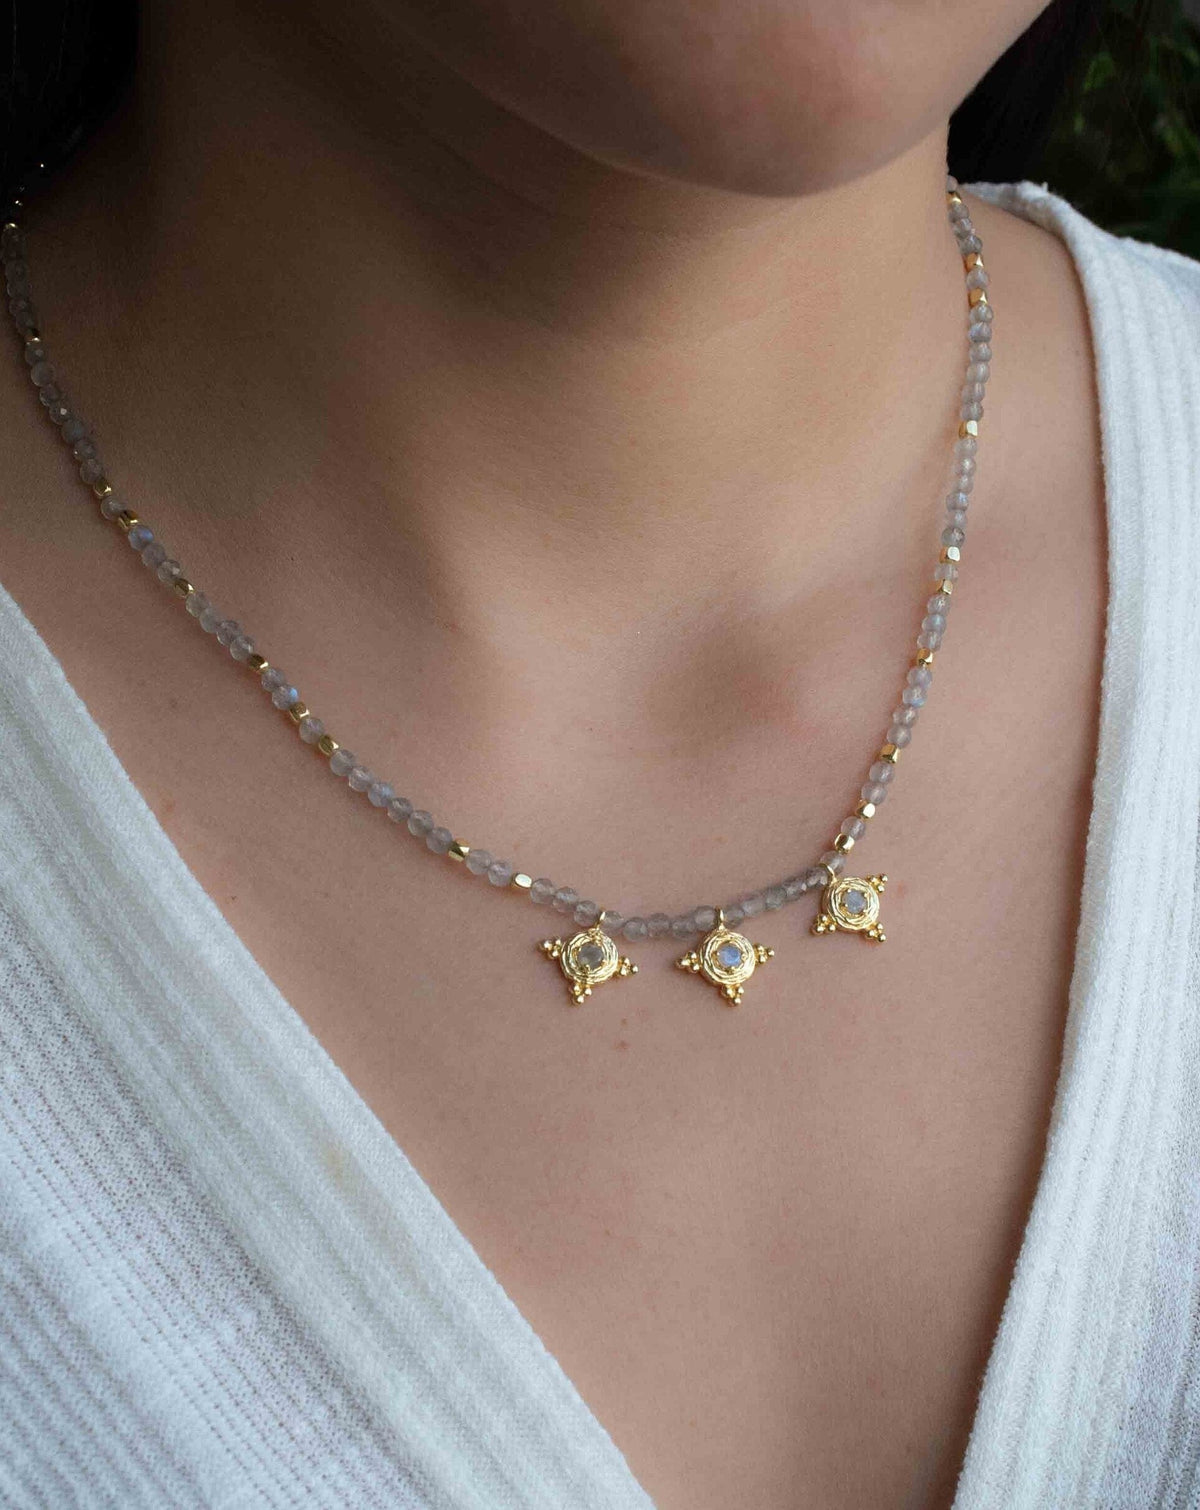 Labradorite, Moonstone and Aqua Chalcedony Bead Necklace *Gold Plated *Handmade *Layered *Gemstone * Elegant * Chic * BJN173